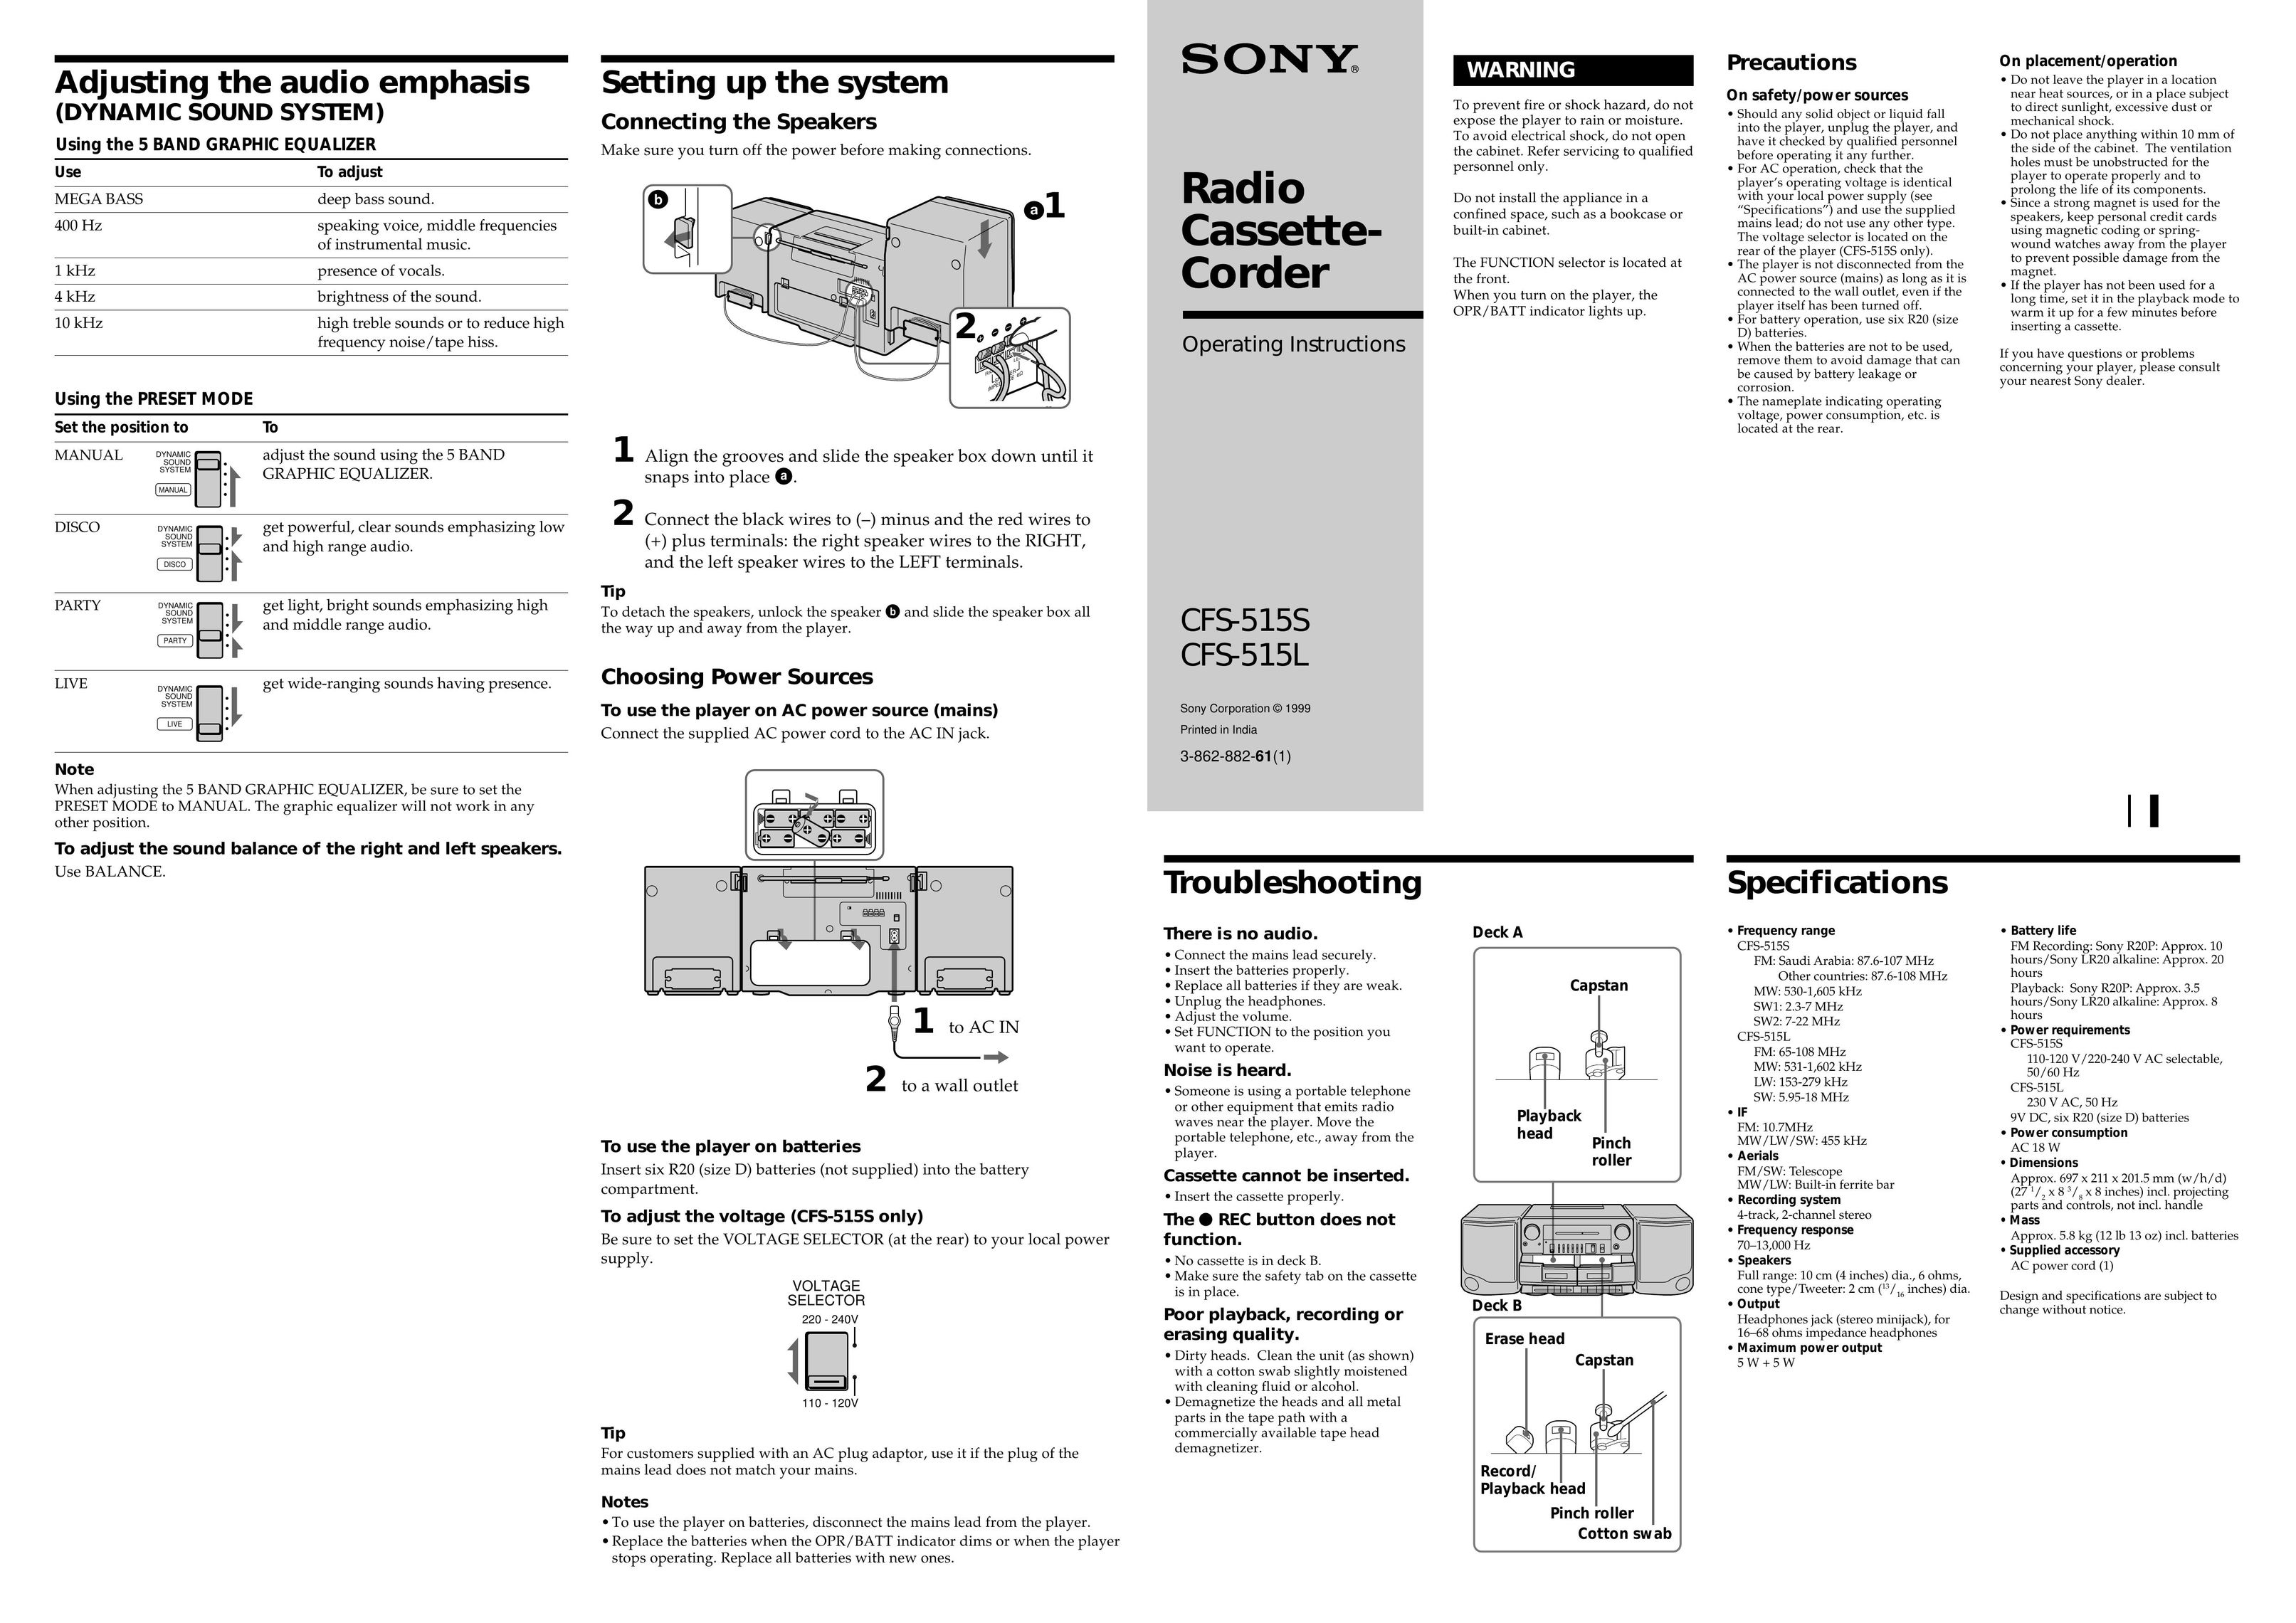 Sony CFS-515L Microcassette Recorder User Manual